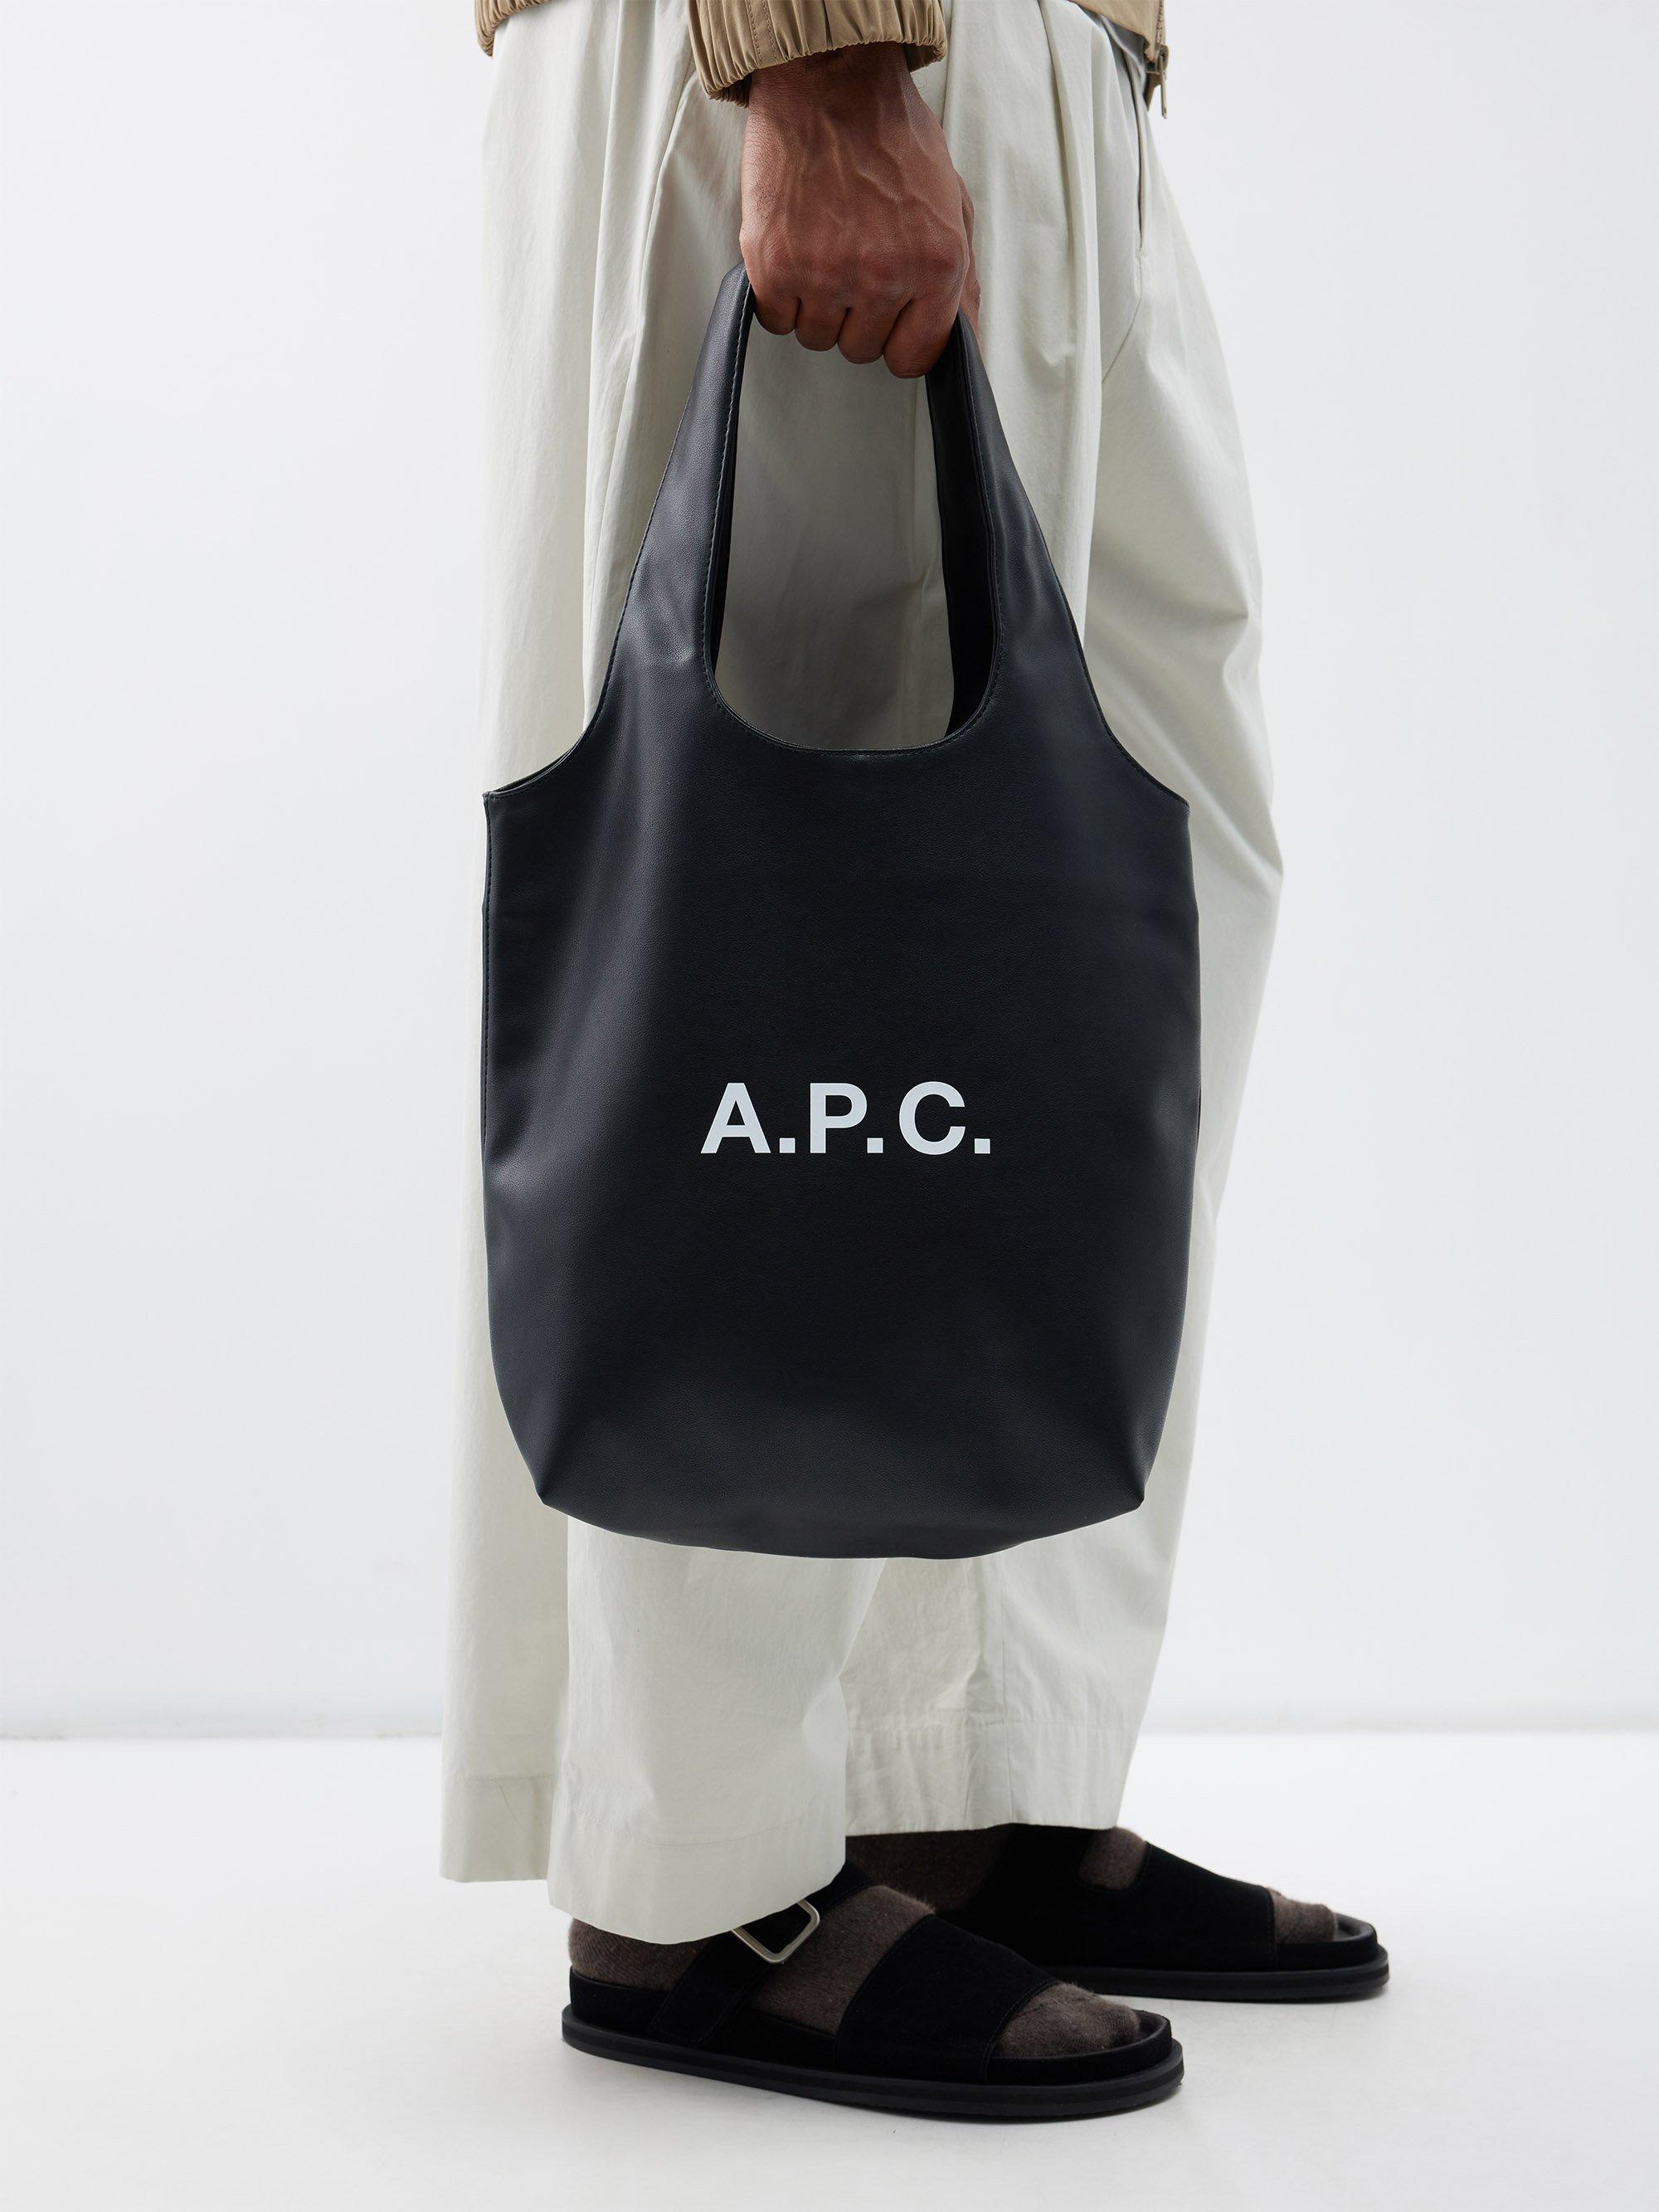 A.P.C. Ninon Tote Bag in Black